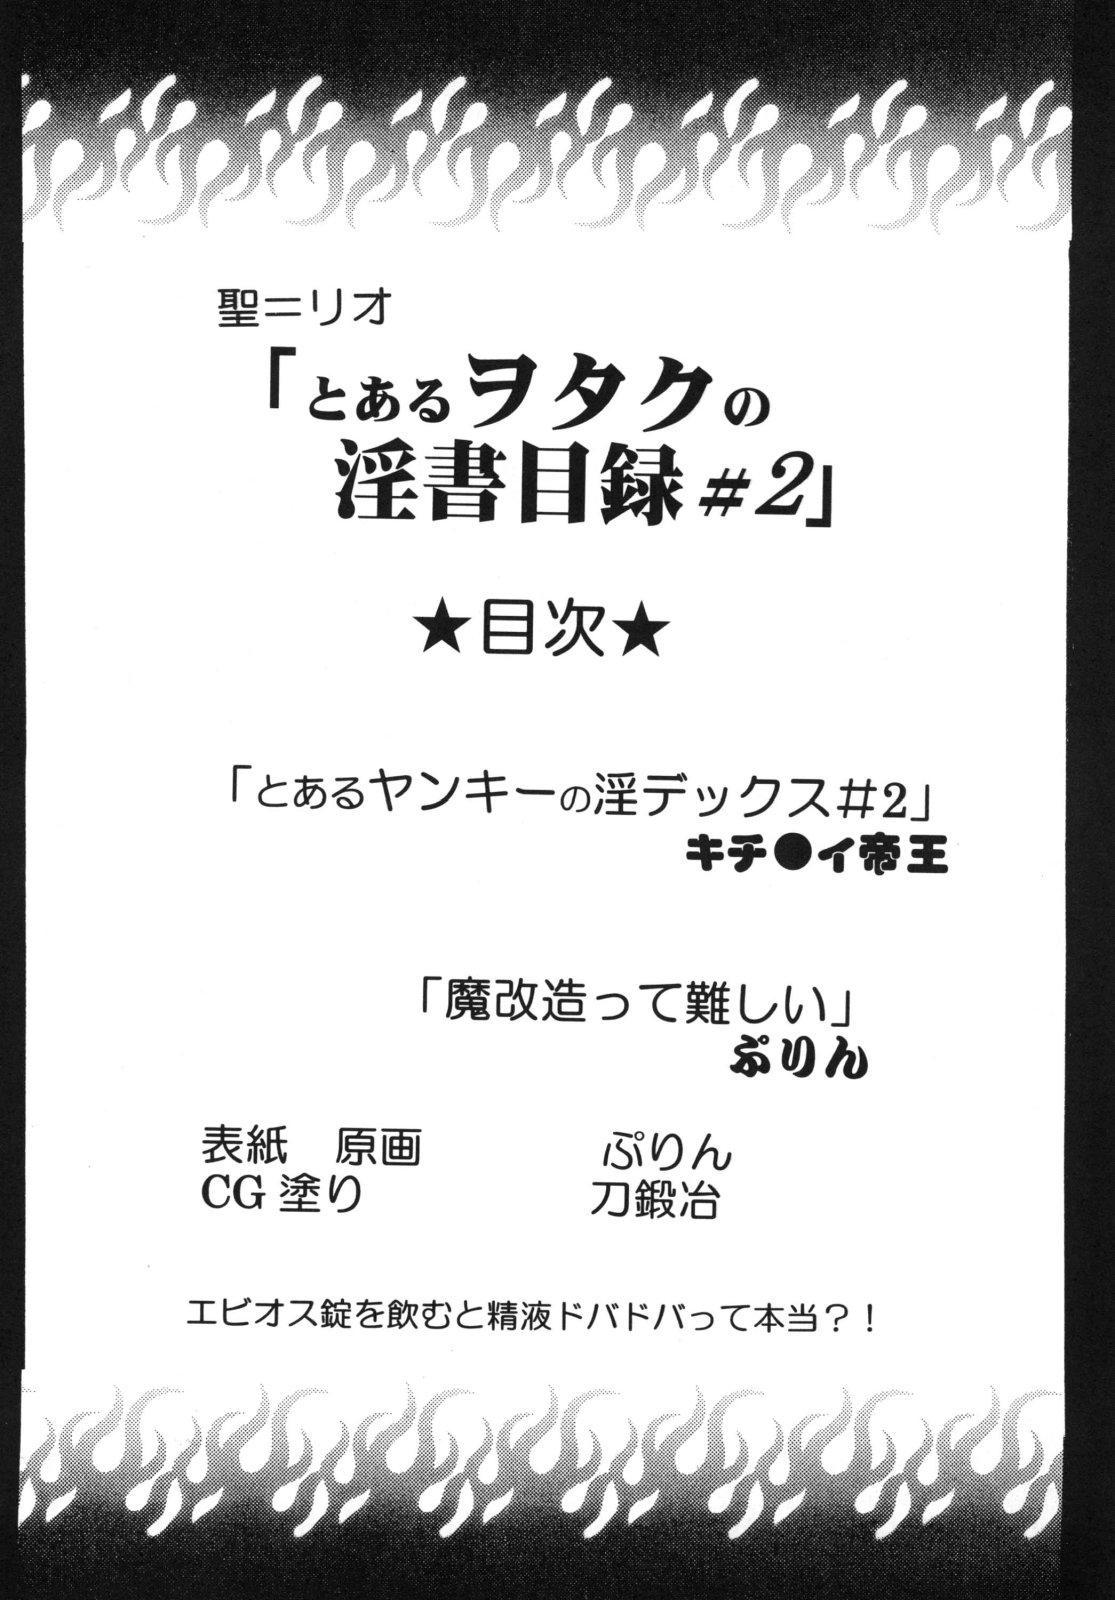 Rimming Toaru Otaku no Index #2 | 某魔术的淫蒂克丝，某不良少年的茵蒂克丝#2 - Toaru majutsu no index | a certain magical index Pee - Page 3